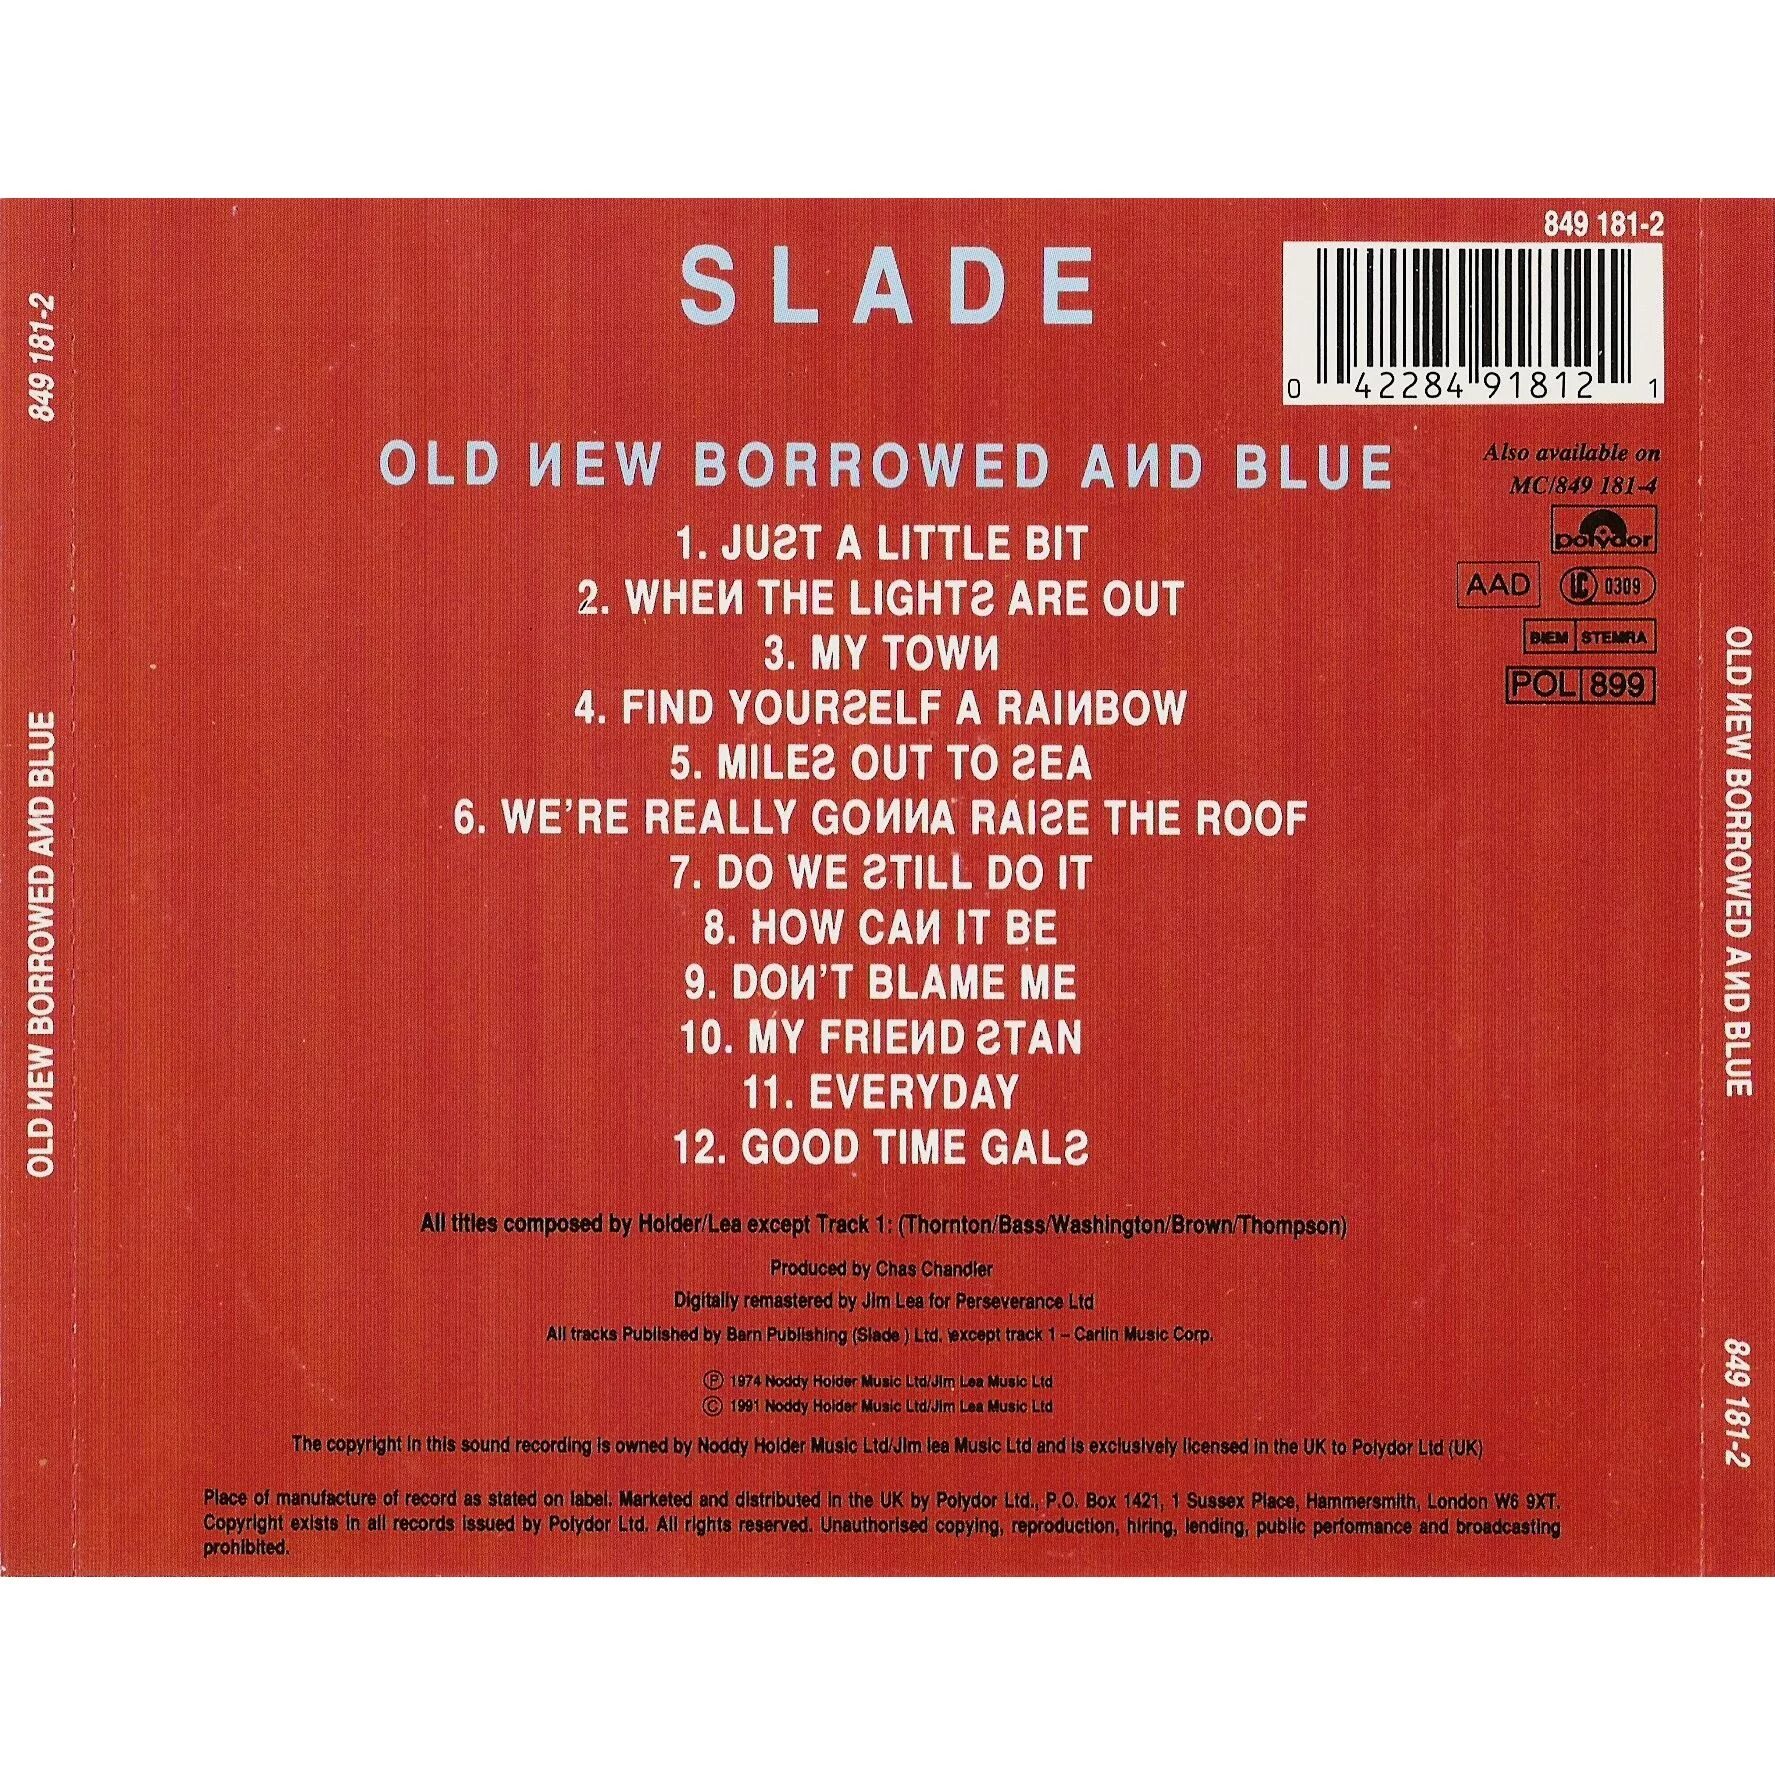 Old New Borrowed and Blue Slade. Slade 1974. Slade old New Borrowed and Blue обложка. Slade old New Borrowed and Blue LP.